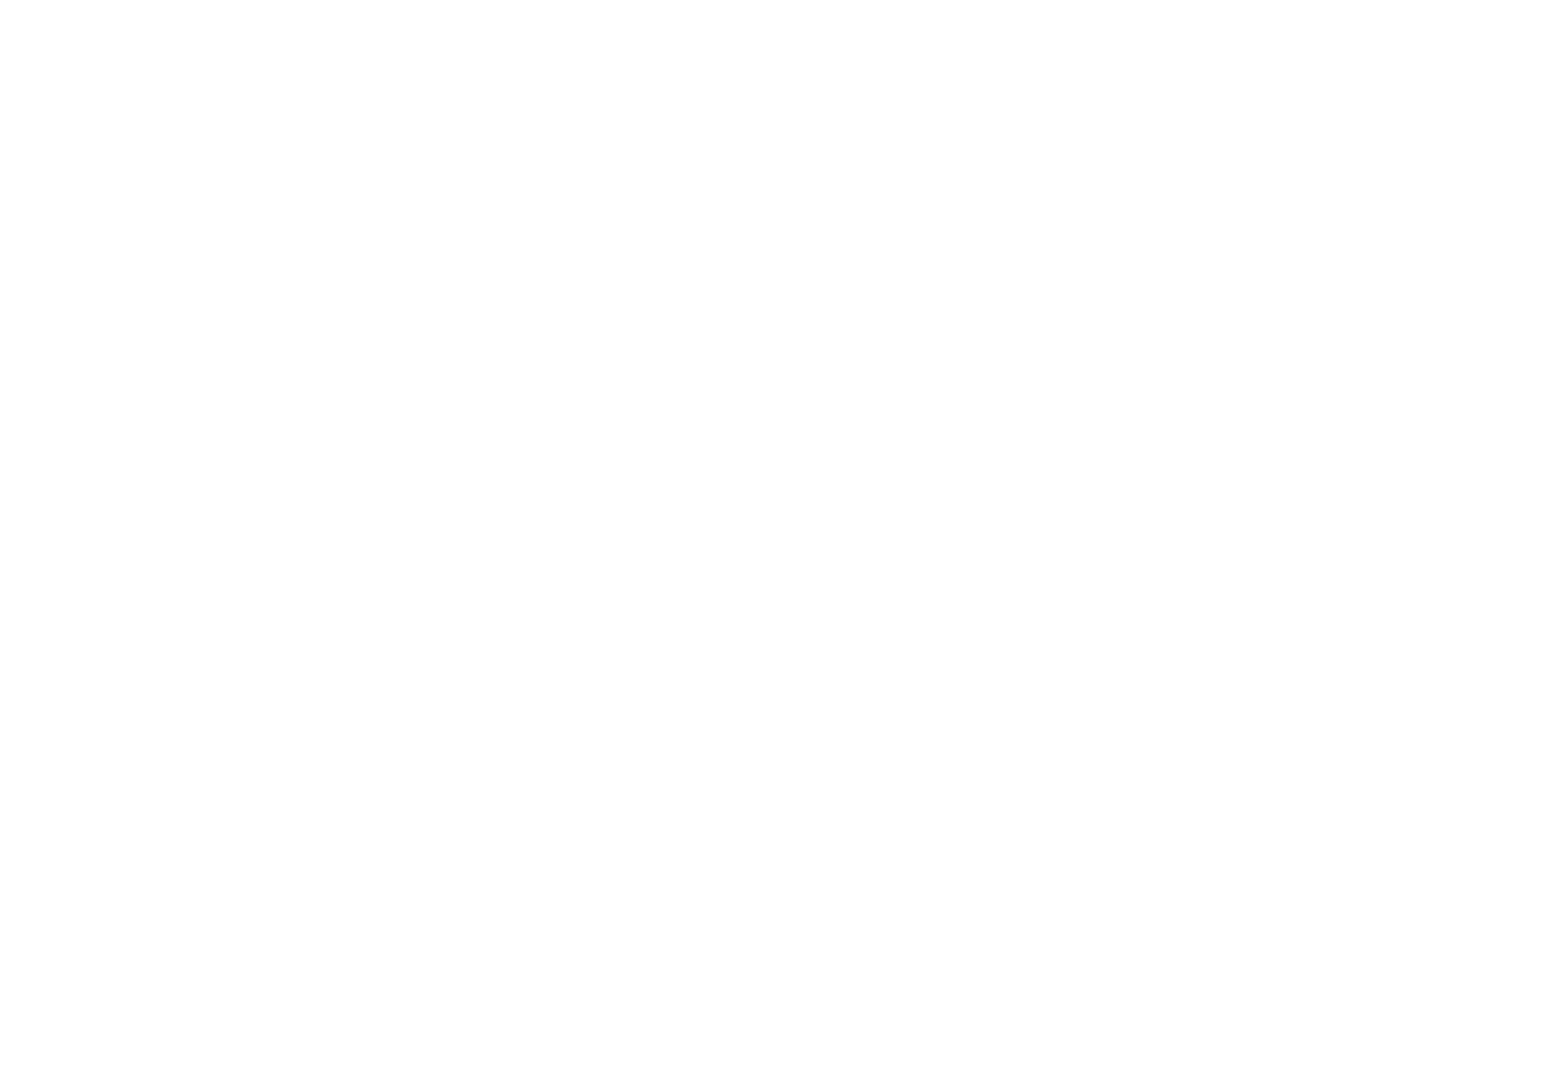 American Vanguard logo pour fonds sombres (PNG transparent)